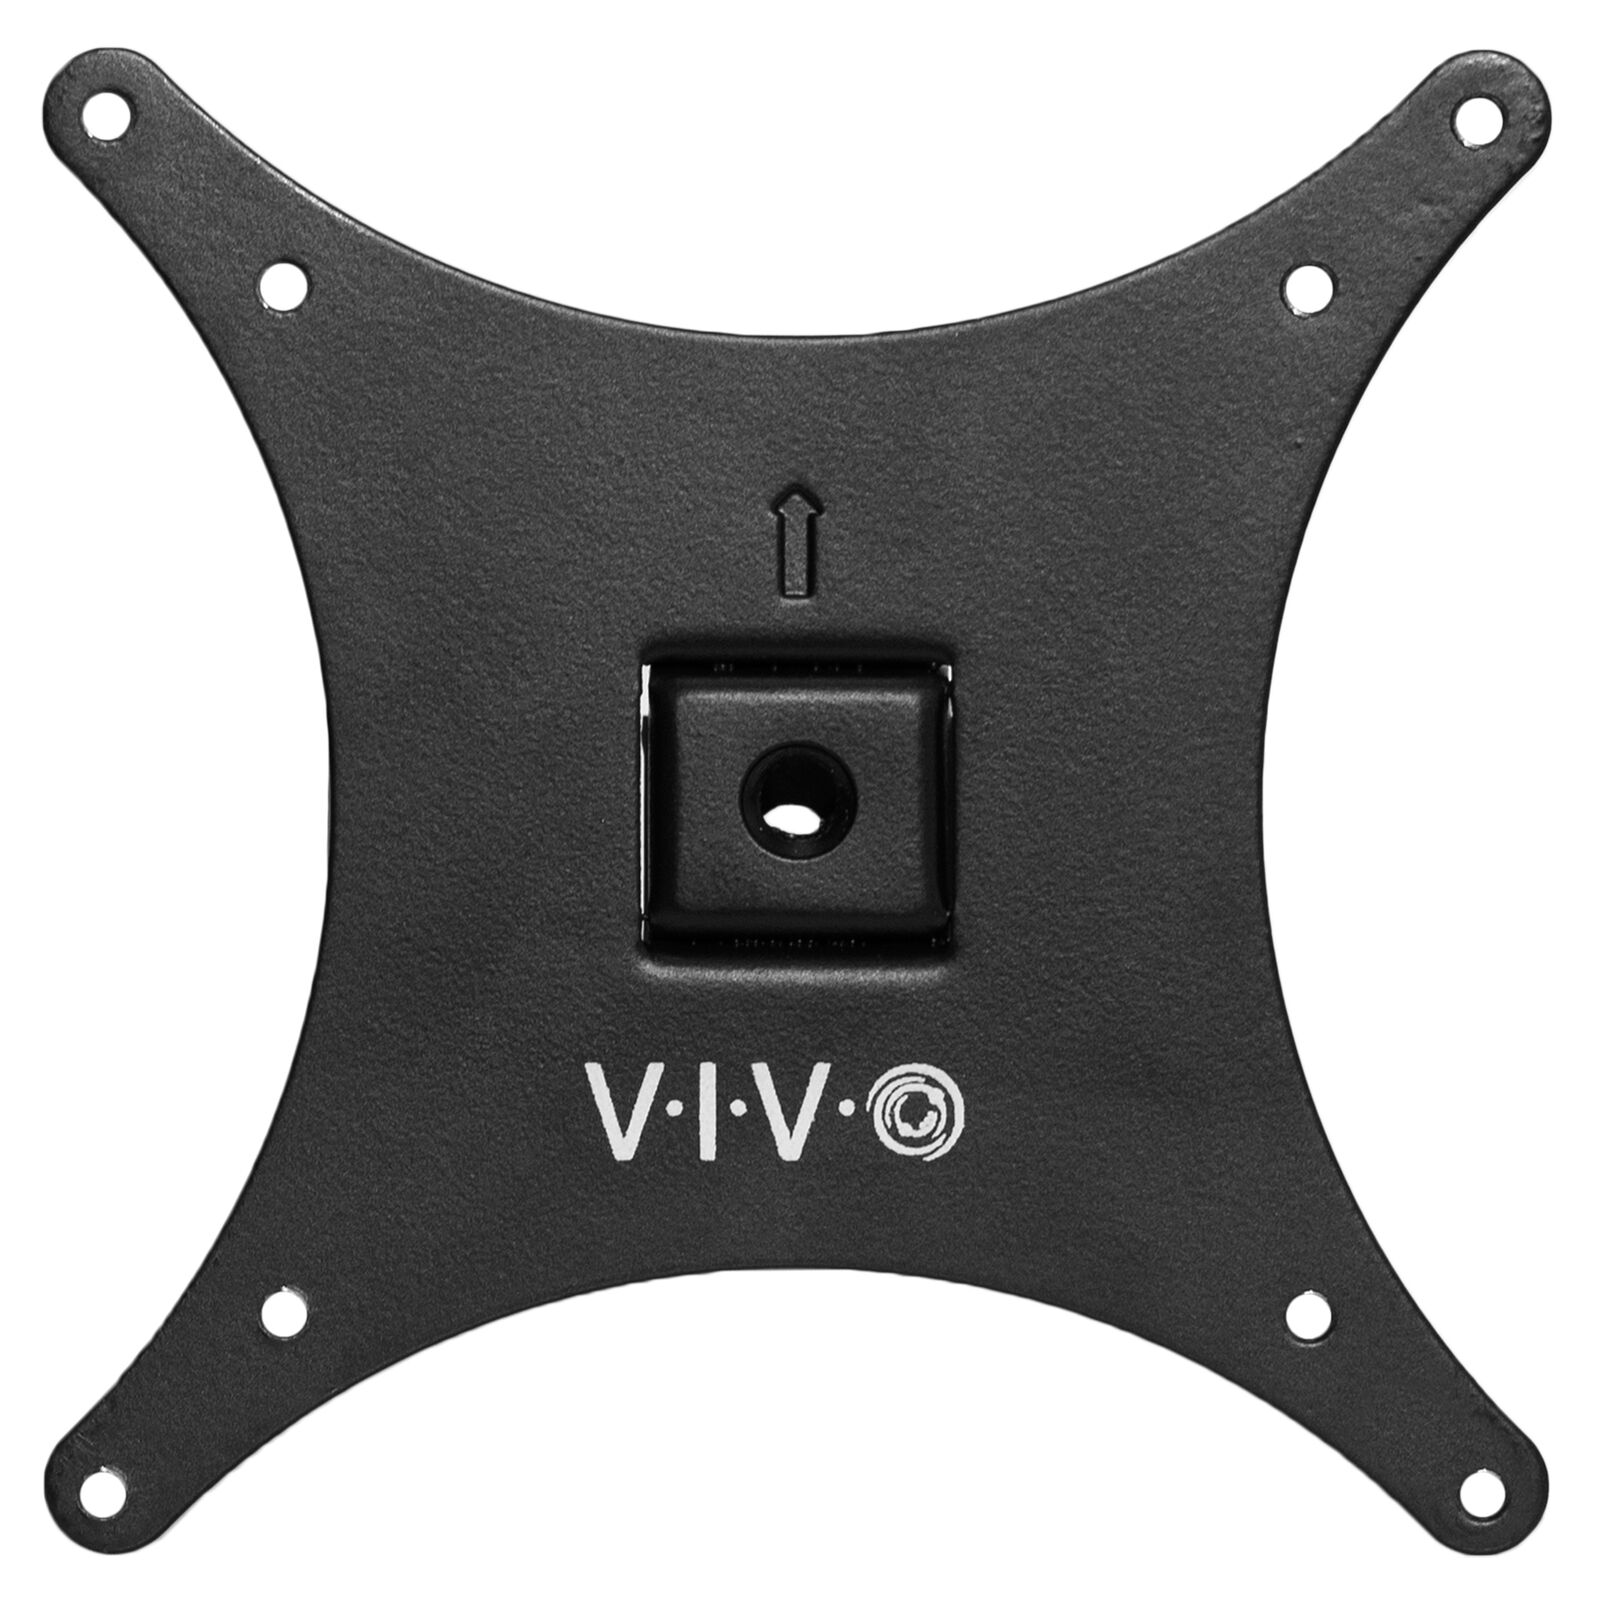 VIVO VESA Adapter Bracket Designed for Sceptre C25, C30, C34 Monitors